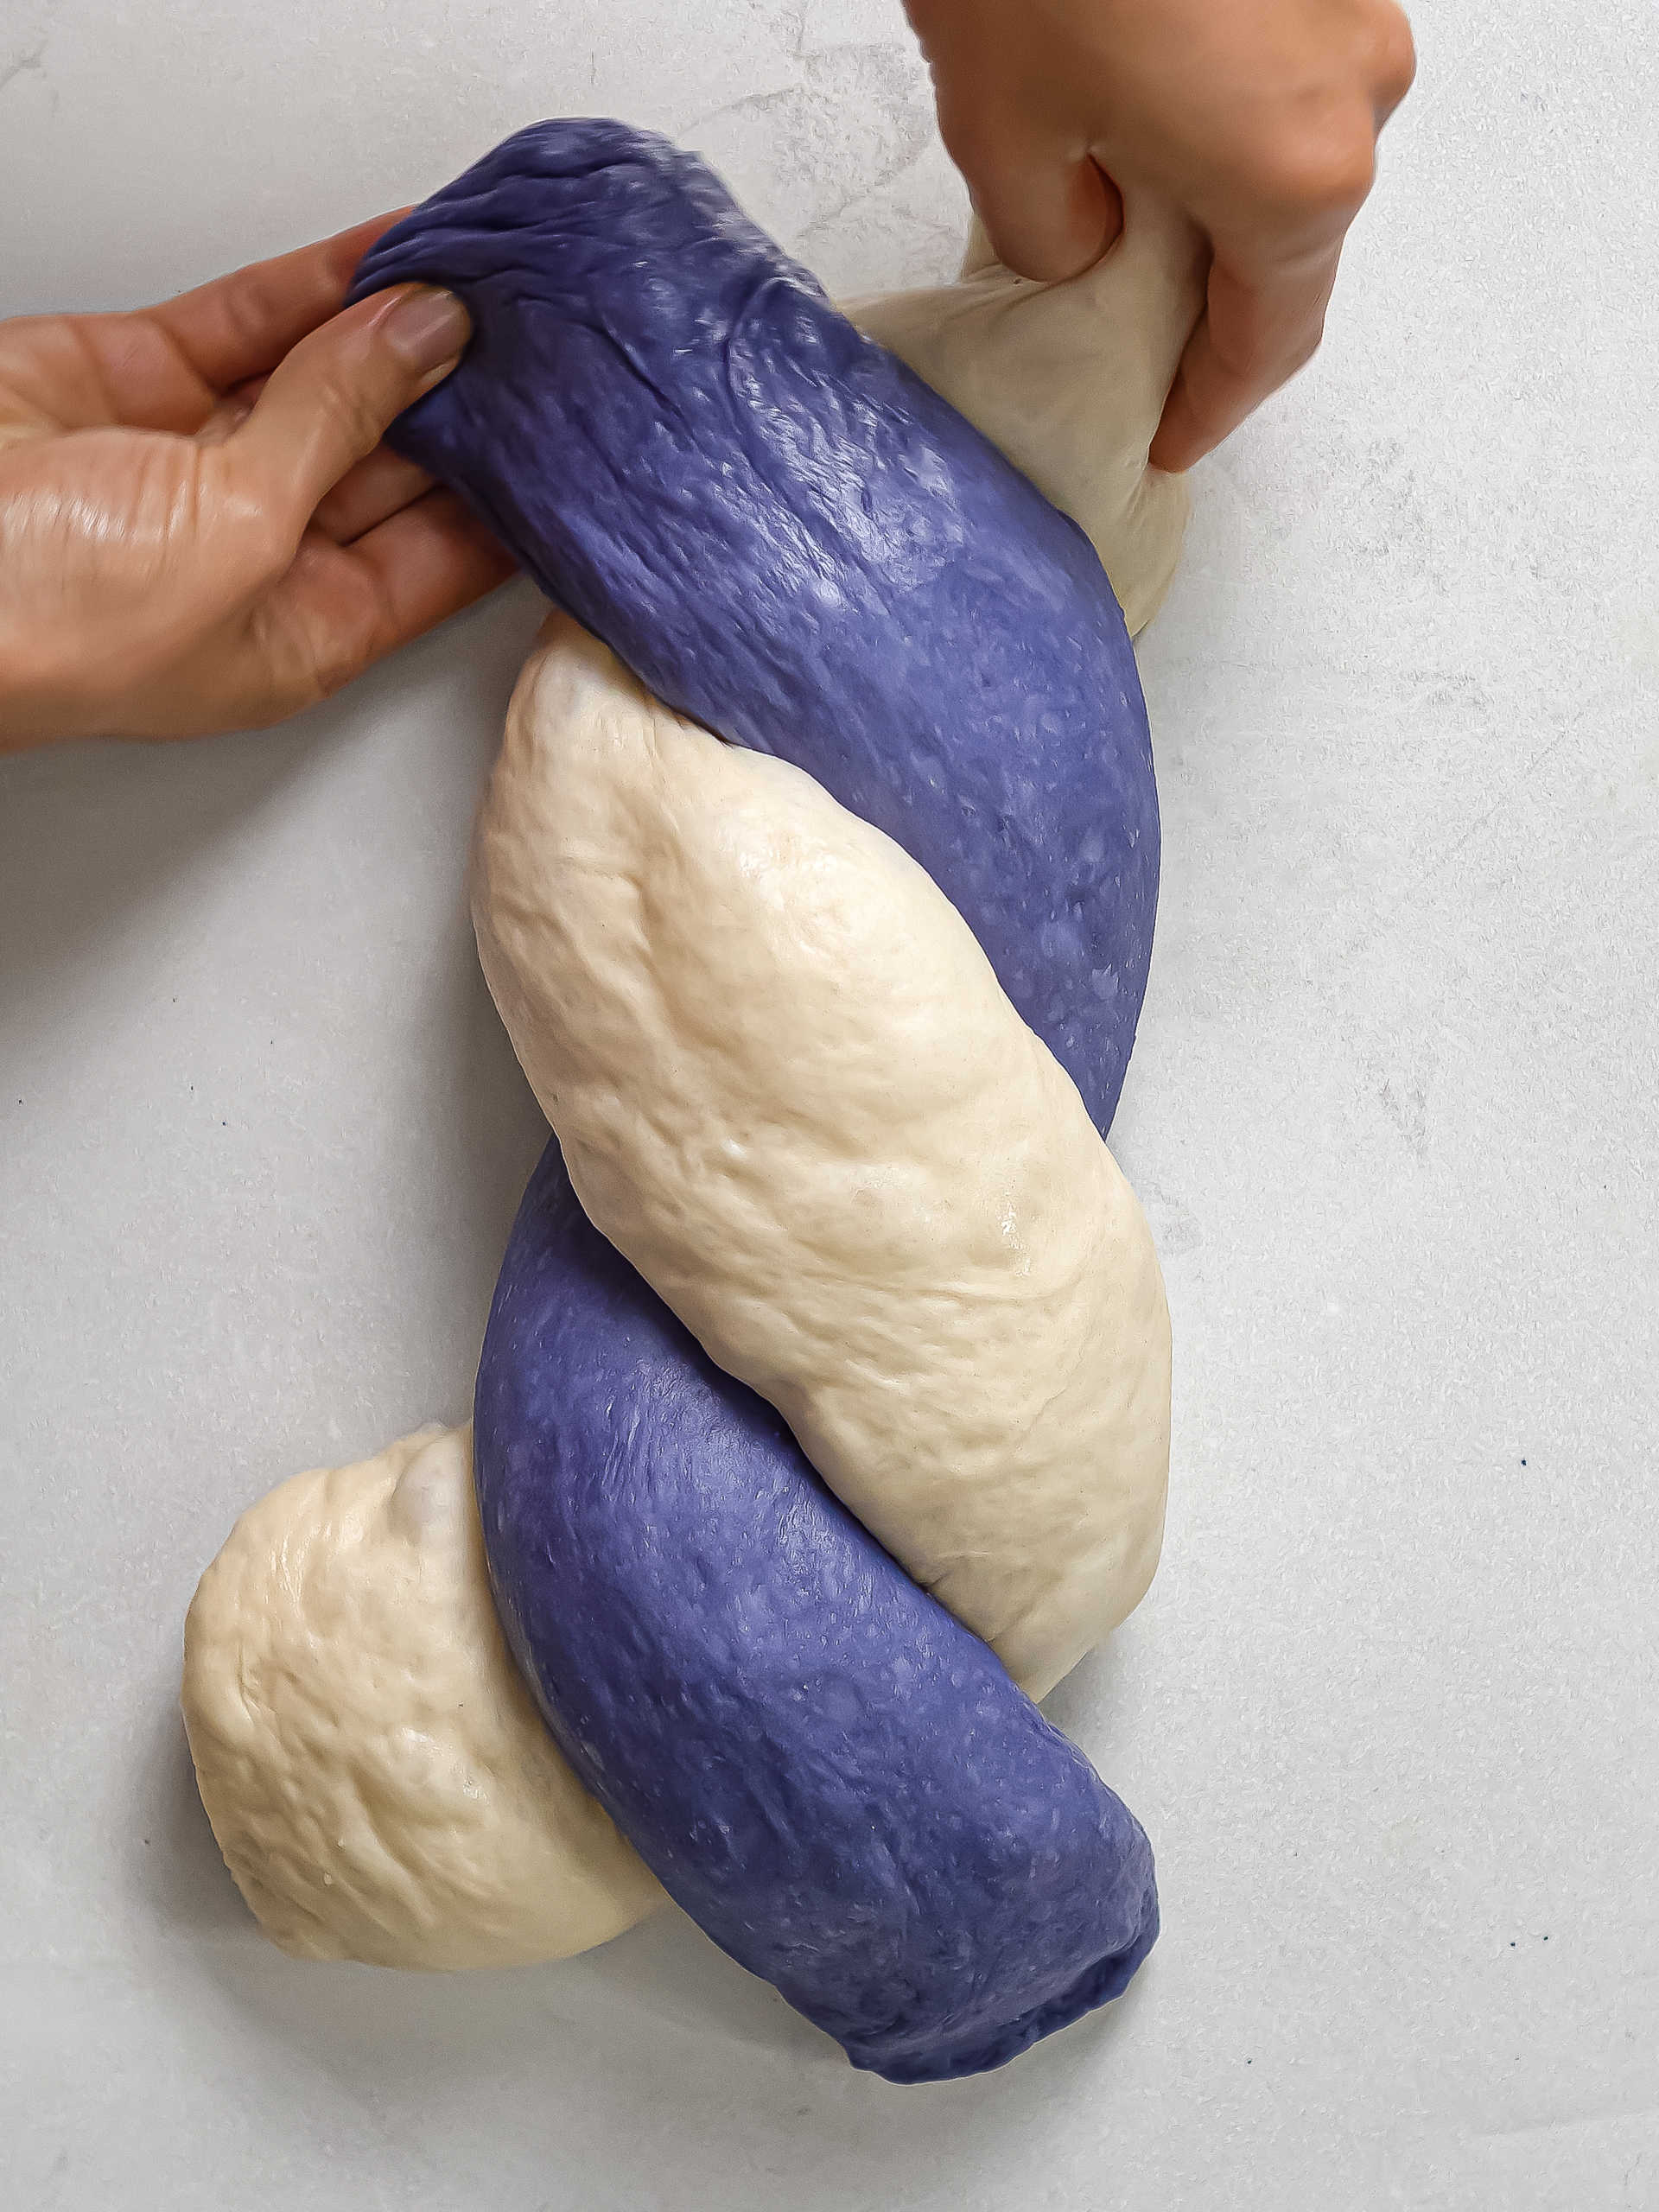 braided white and blue bread dough